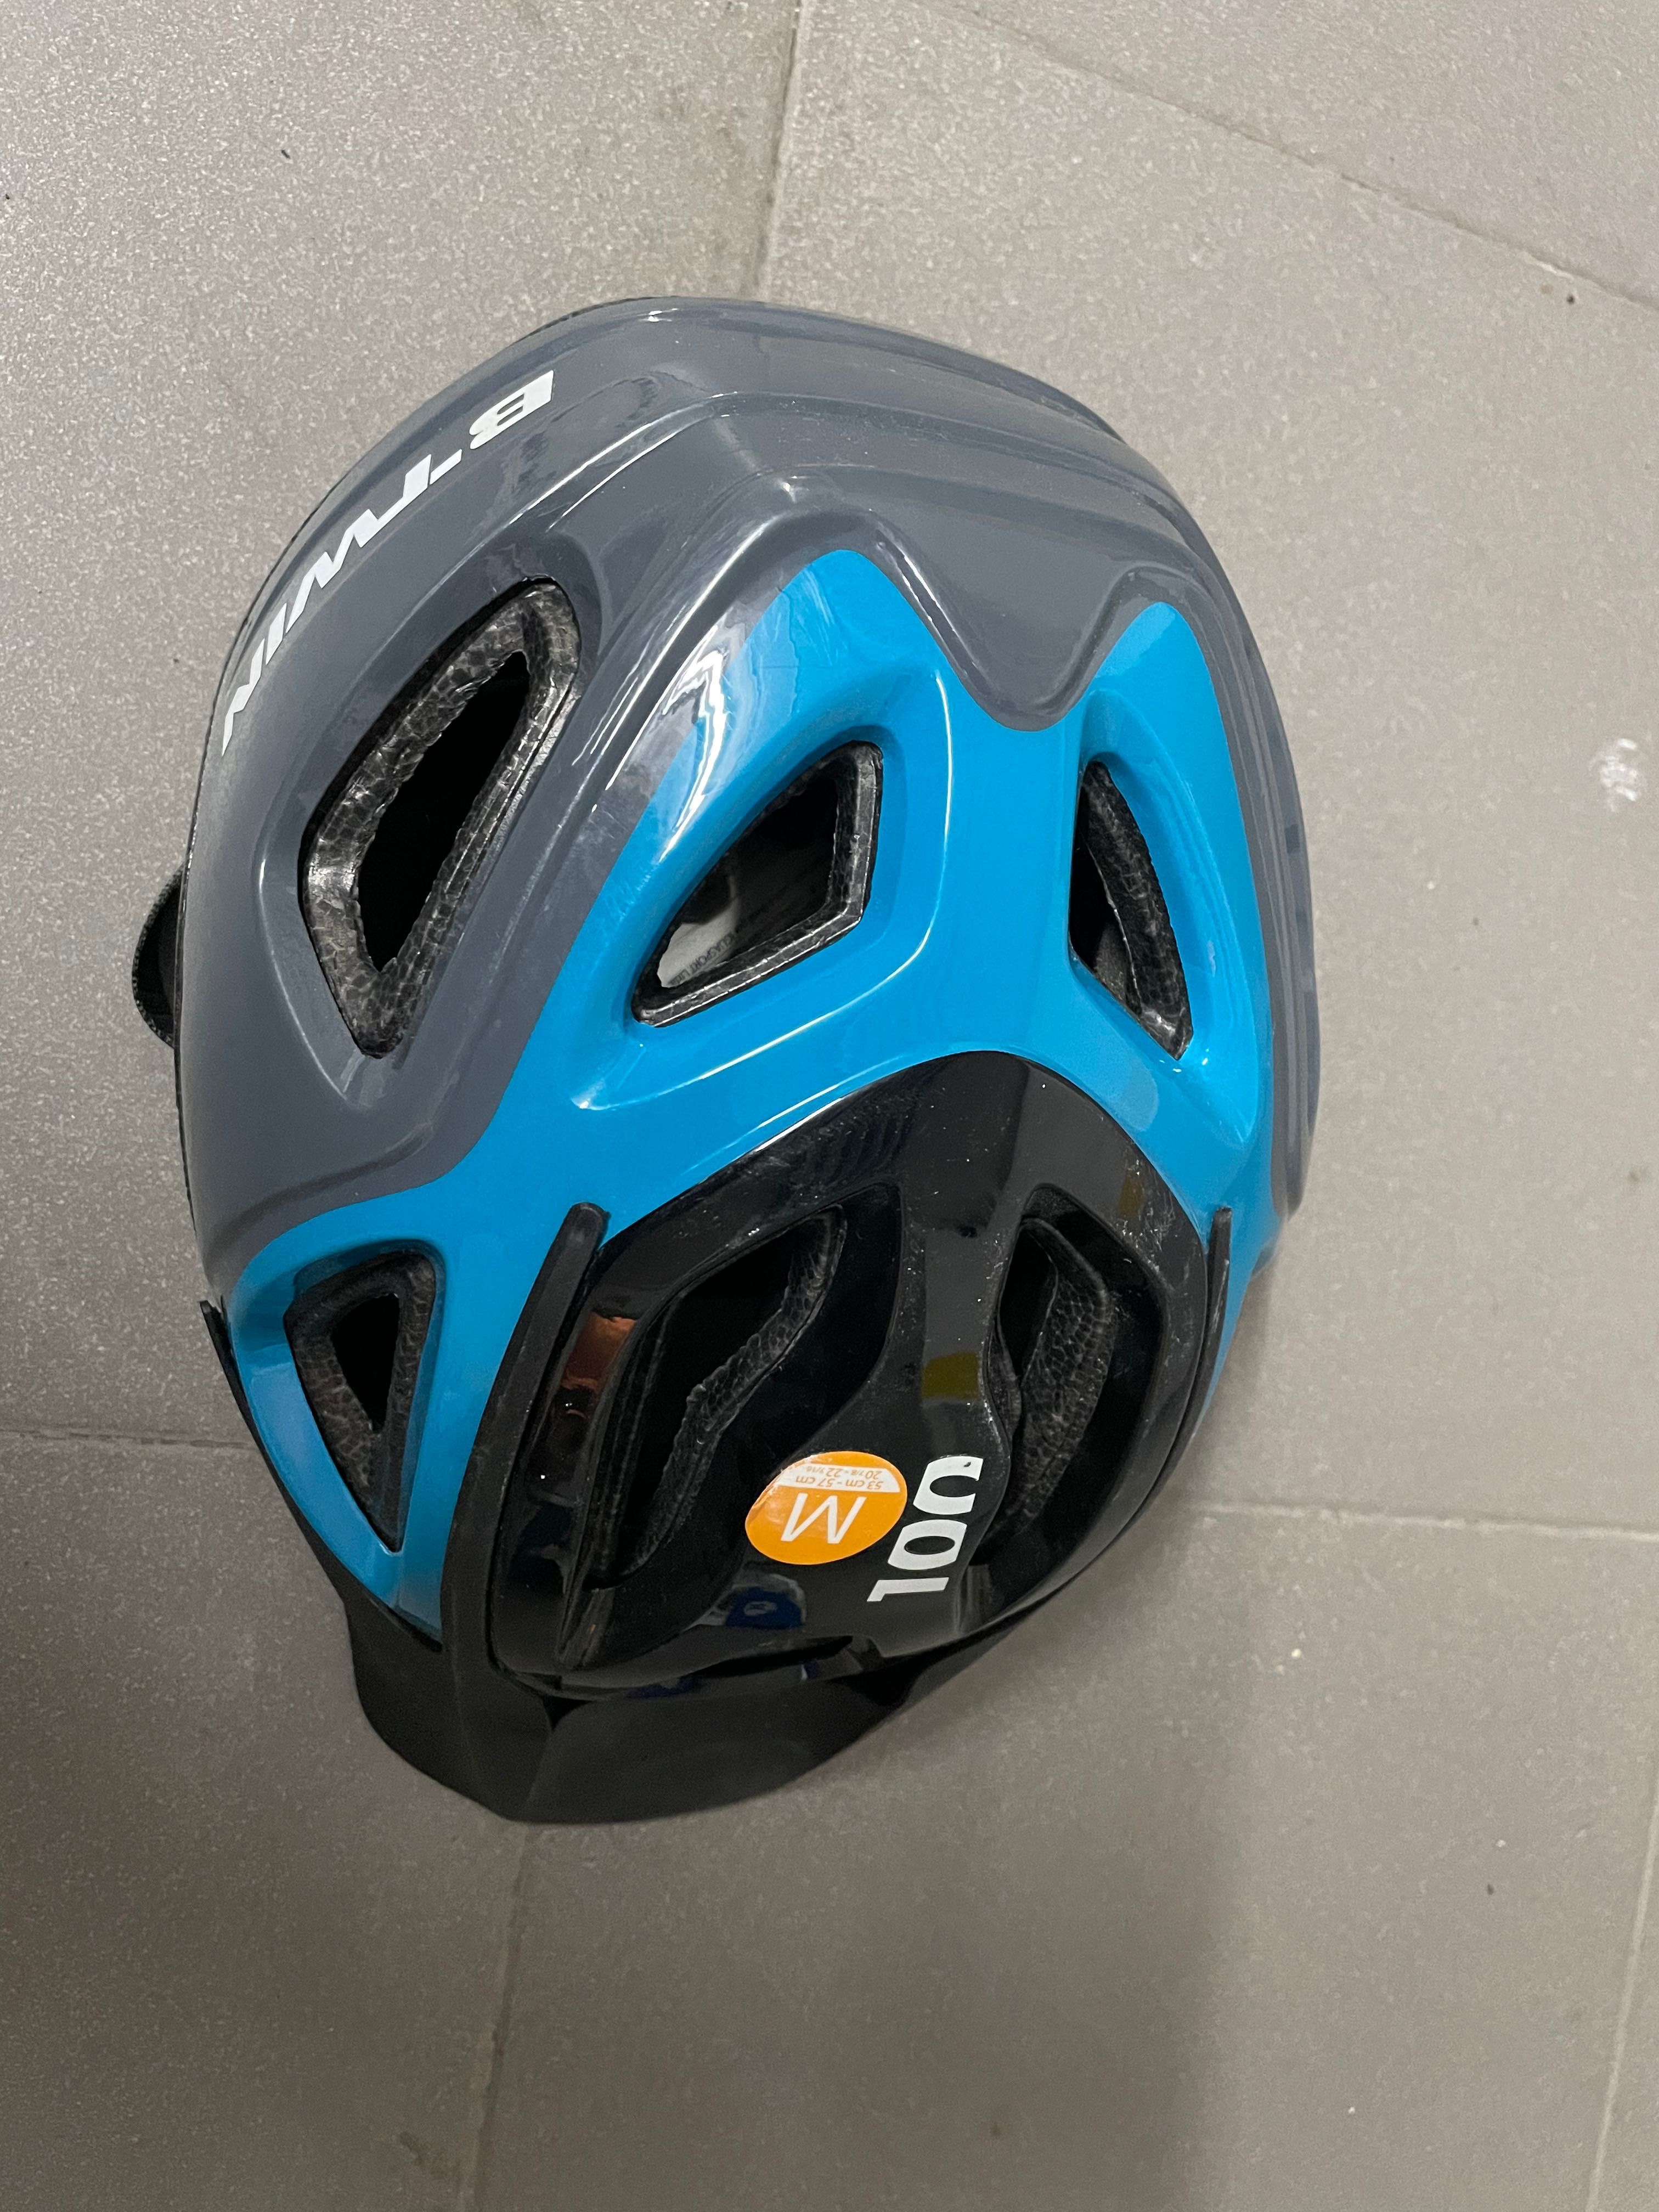 Vendo capacete para bicicleta tamanho M